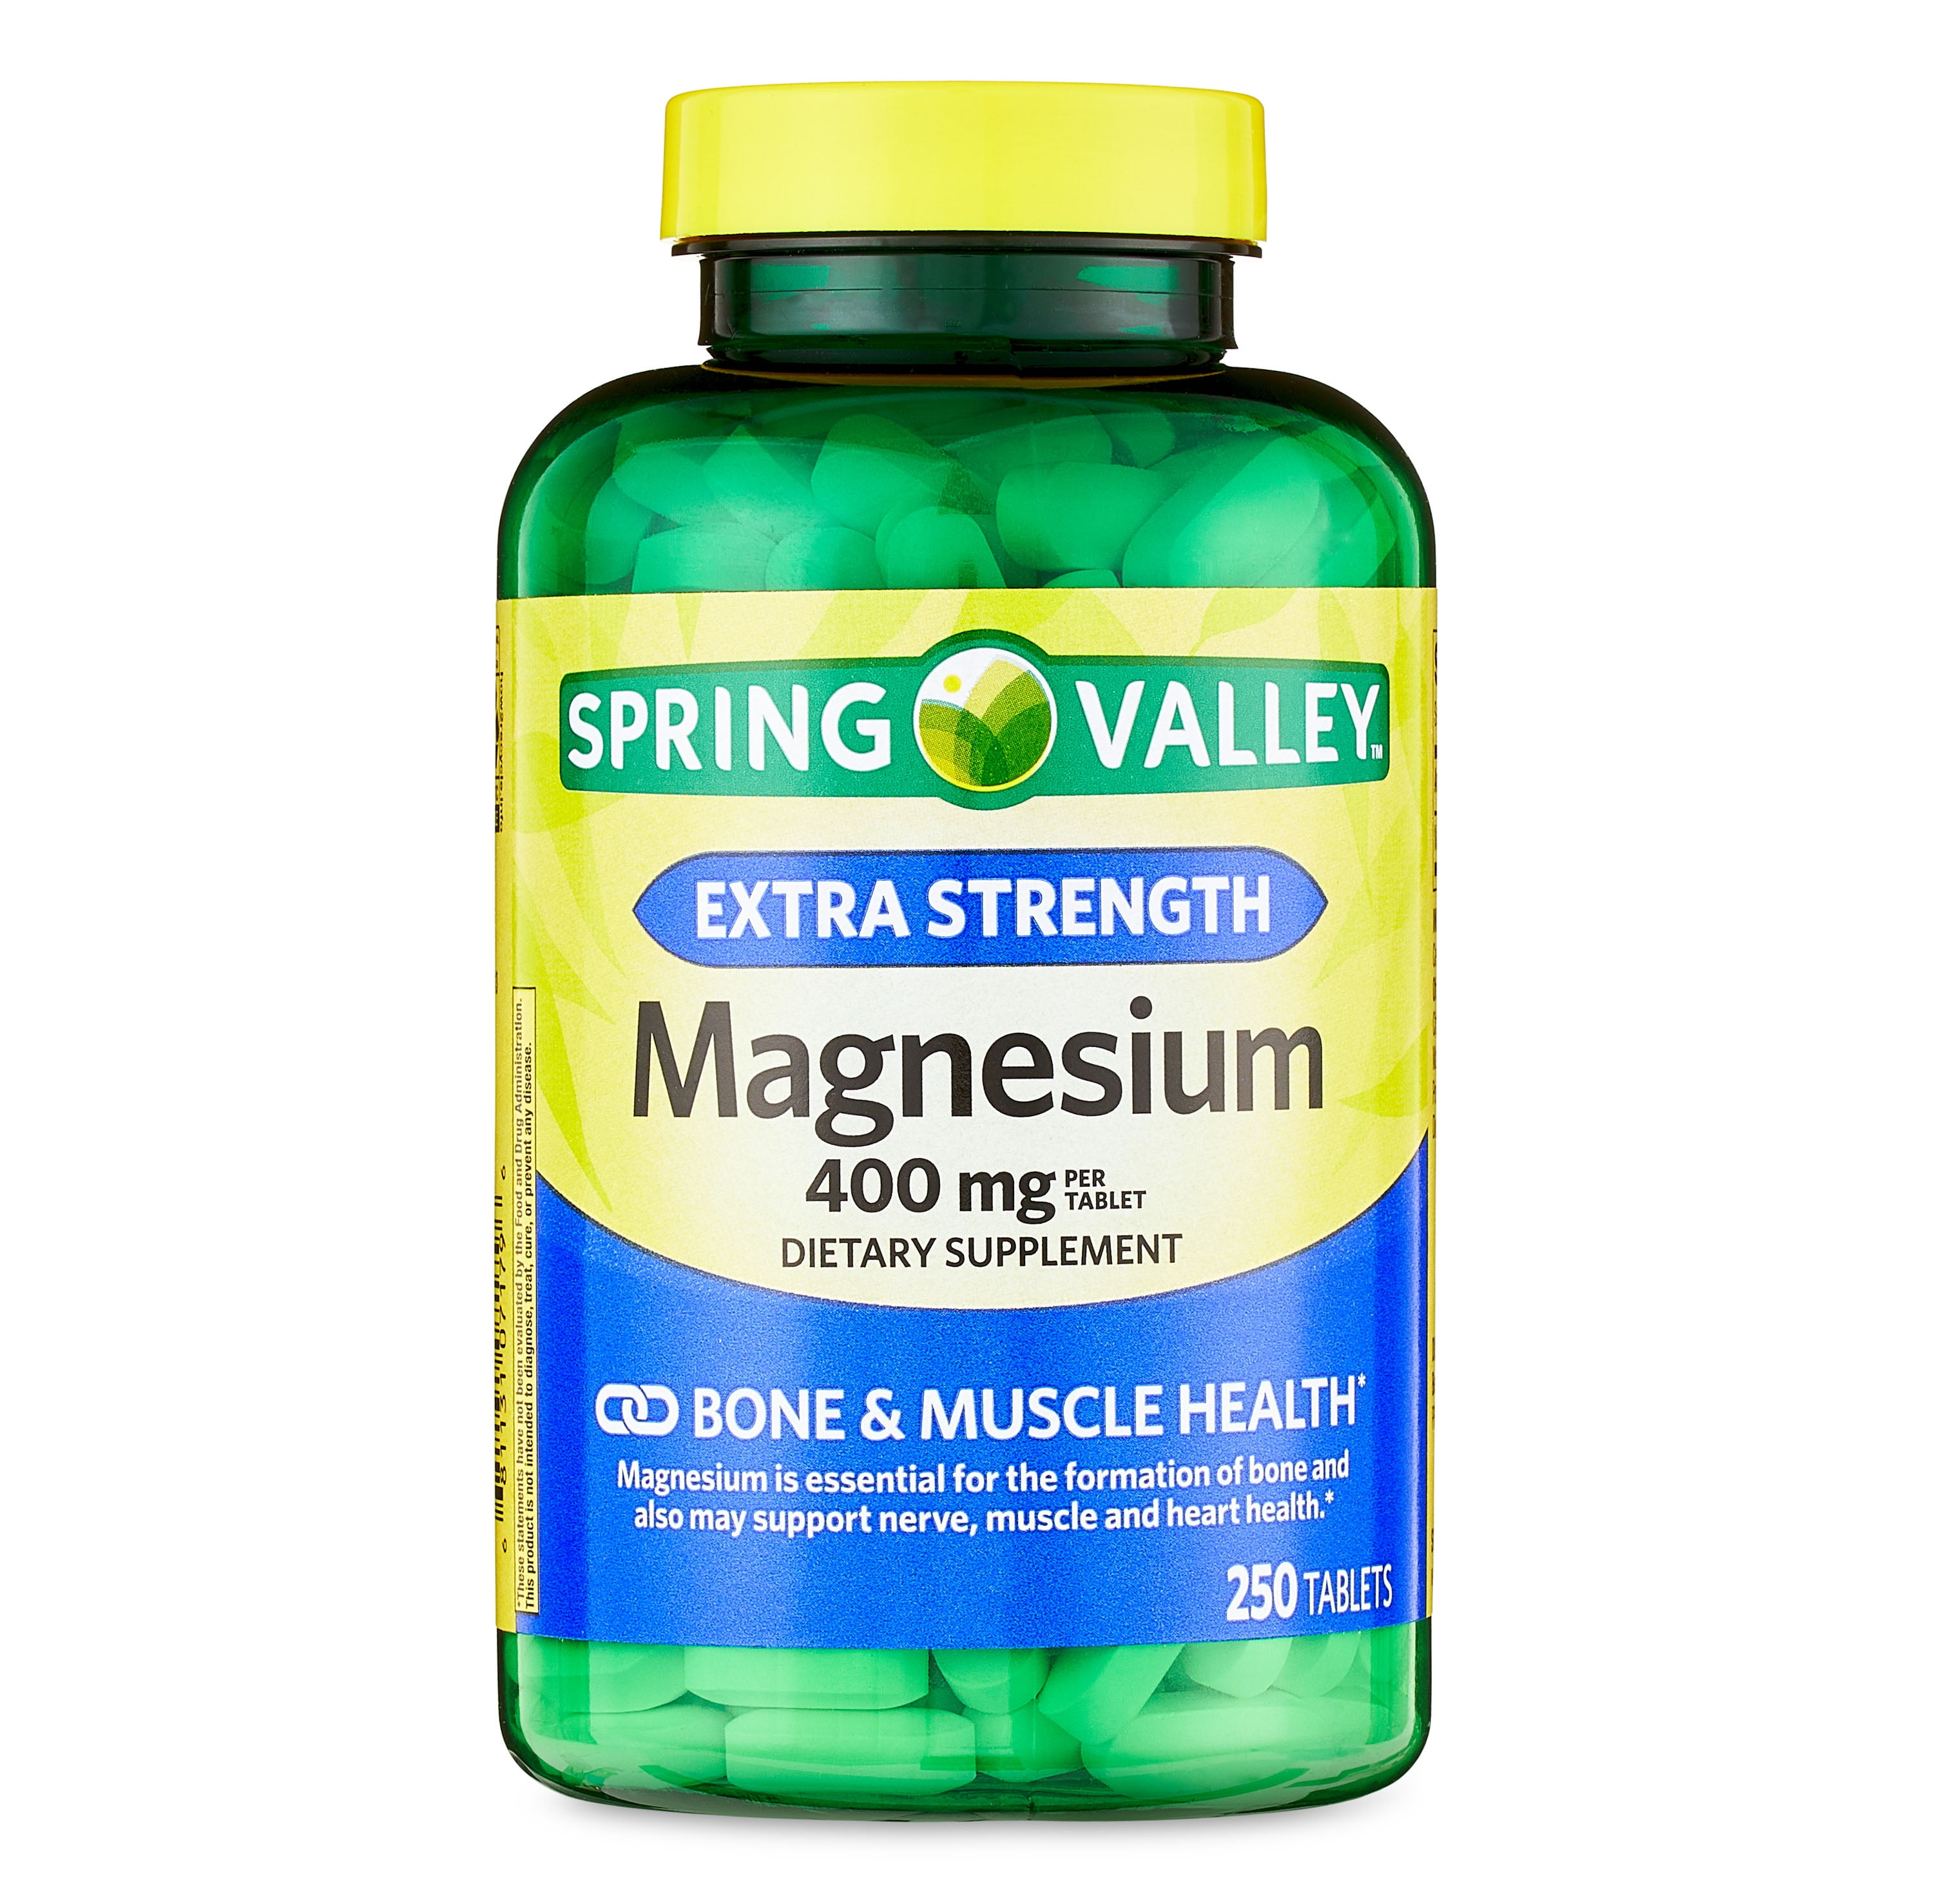 Meevoelen kraai Verduisteren Spring Valley Extra Strength Magnesium Tablets Dietary Supplement, 400 mg,  250 Count - Walmart.com